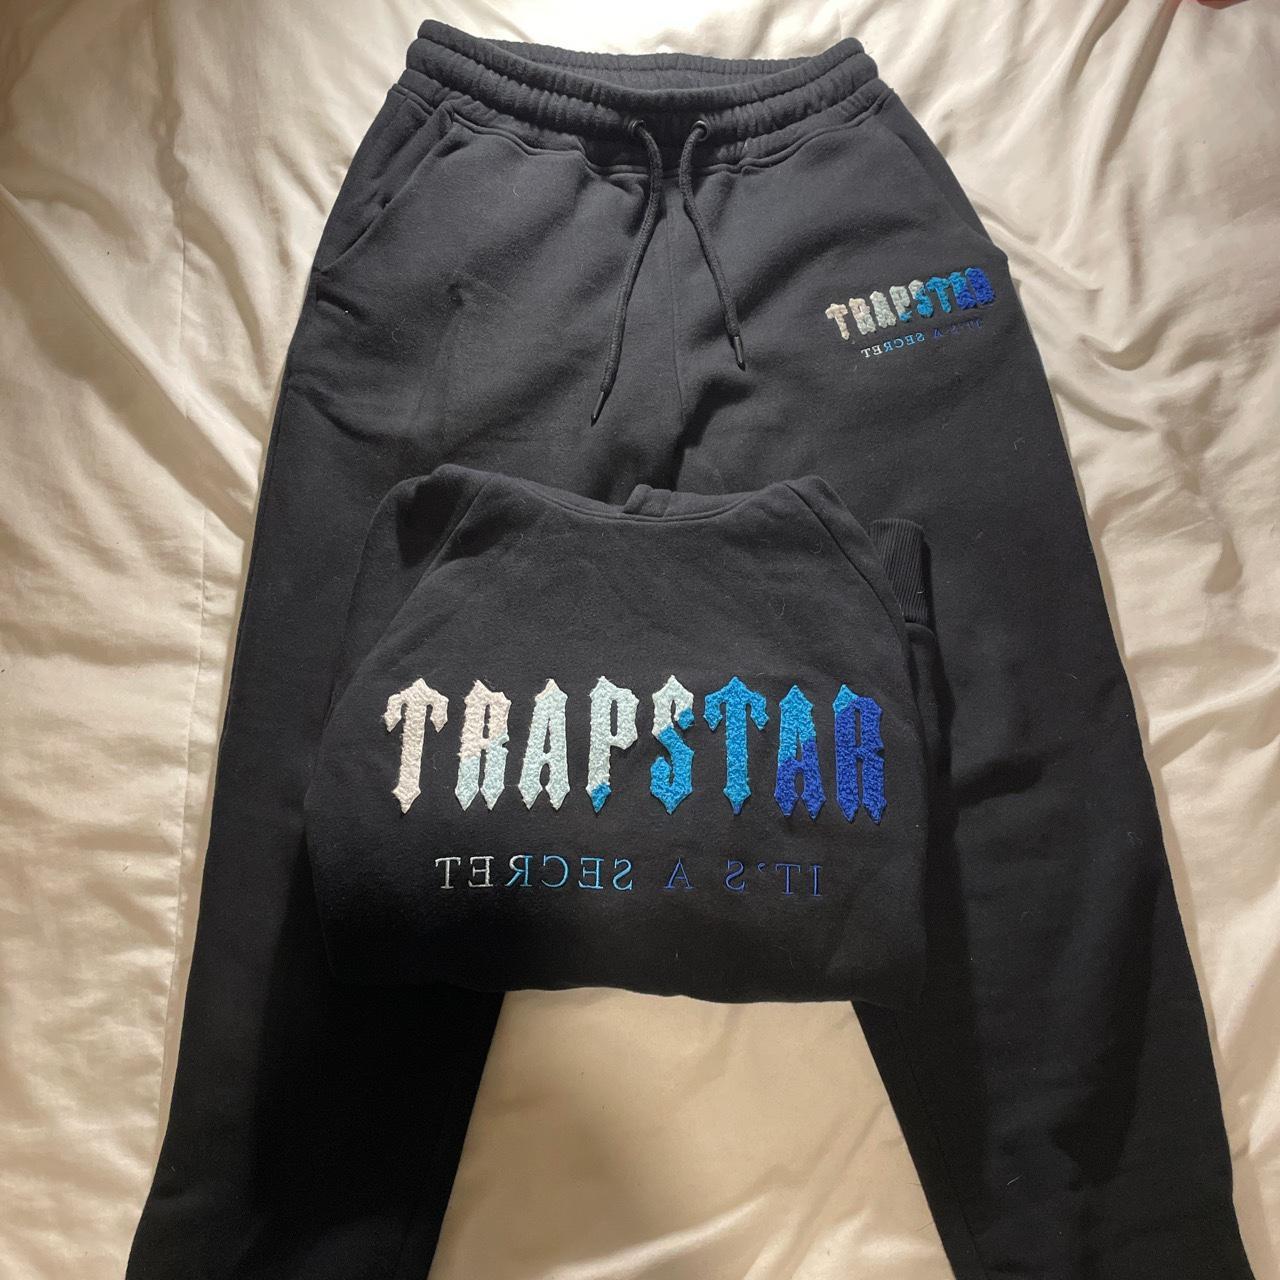 Shop Trapstar Tracksuit Black Ice Blue